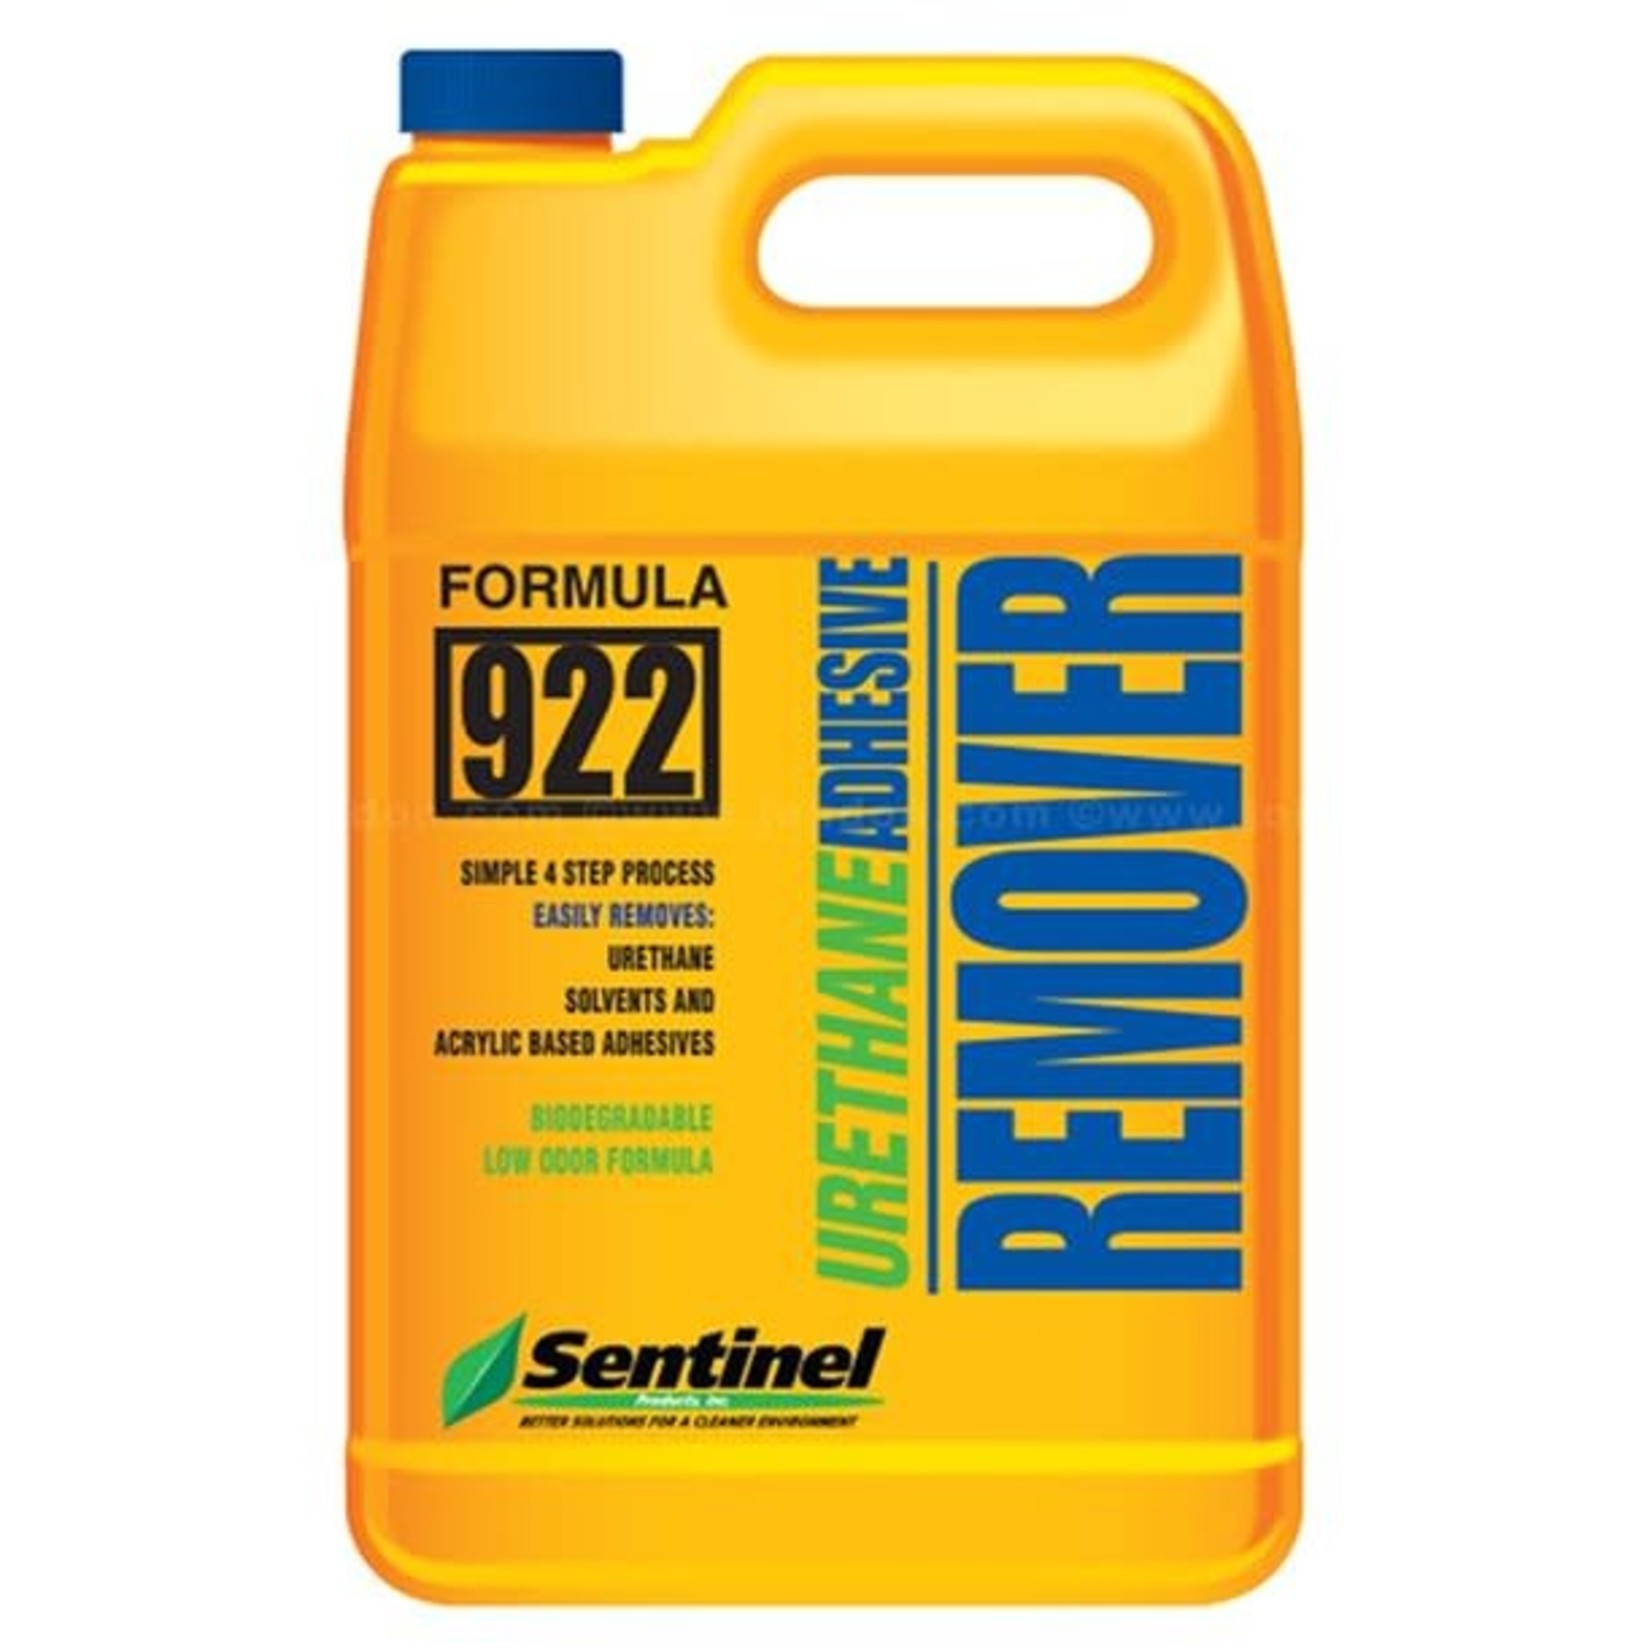 Sentinel Sentinel Formula 922 (Urethane Adhesive Remover) 1 Gallon (DISSCONTINUED)